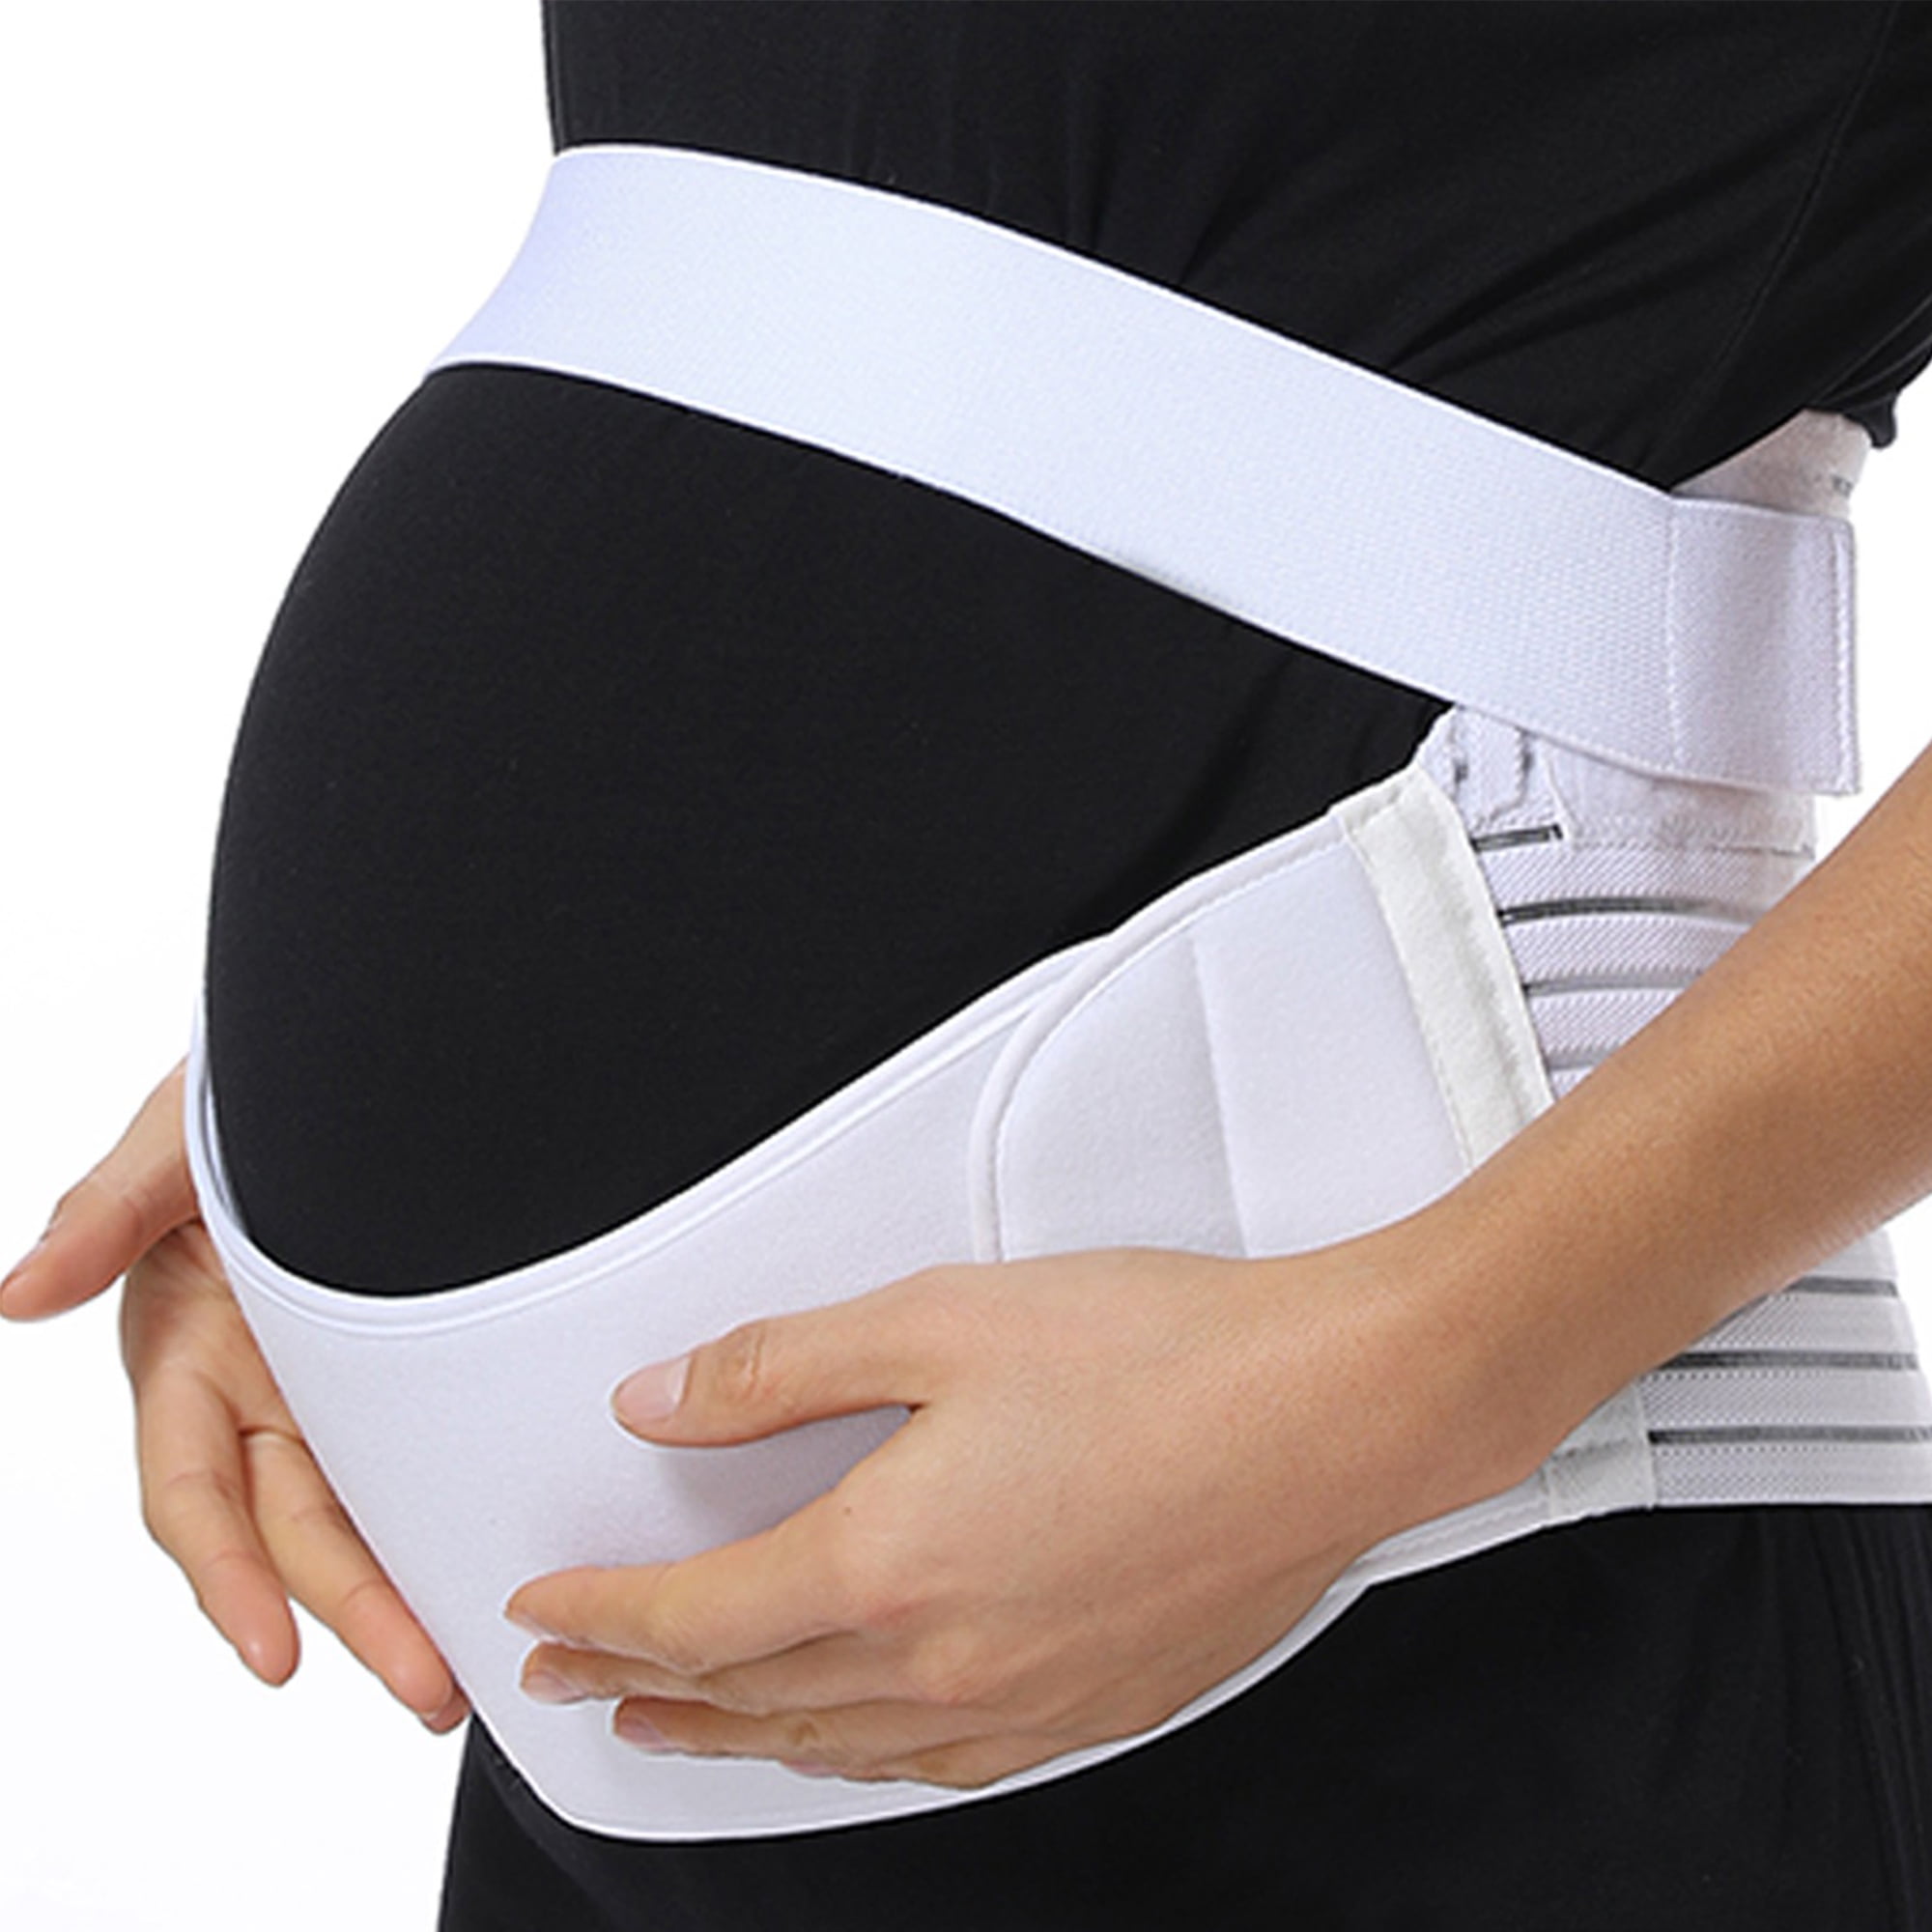 DELUXE MATERNITY SUPPORT BAND Abdomen & Back Brace Pregnancy Belly Tummy Belt 